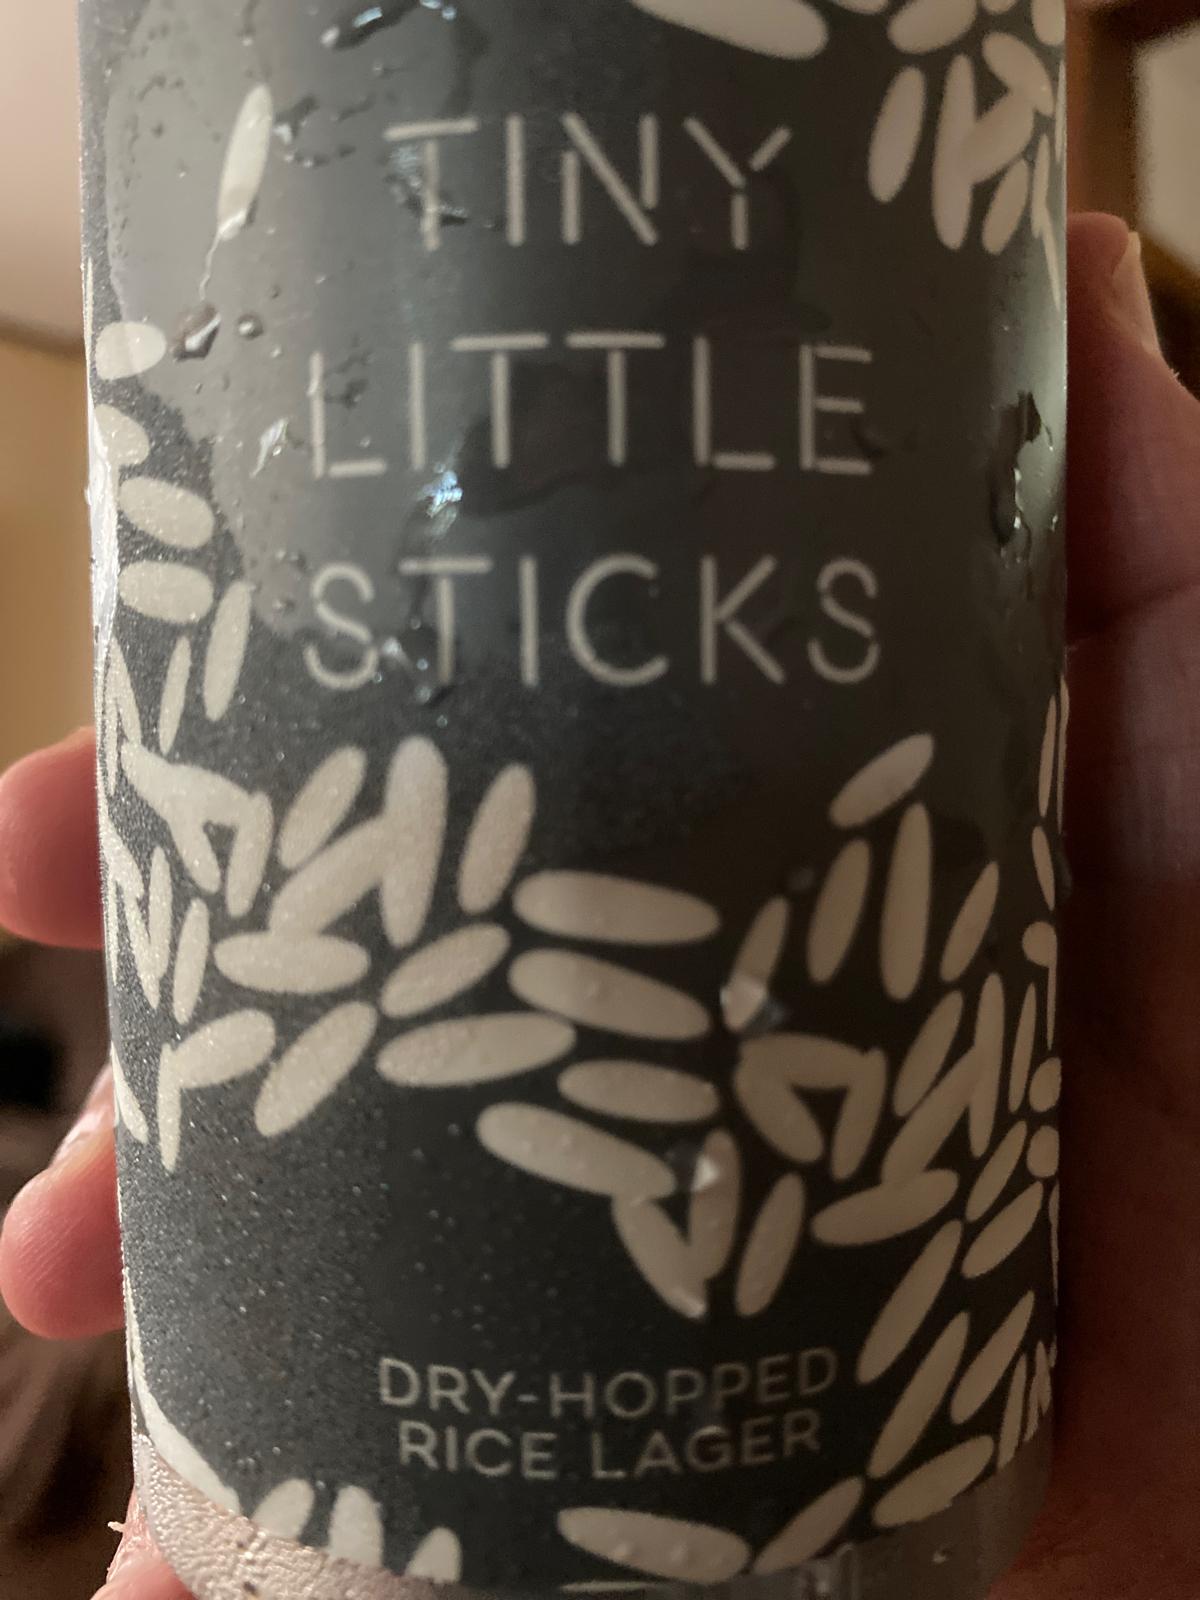 Tiny Little Sticks